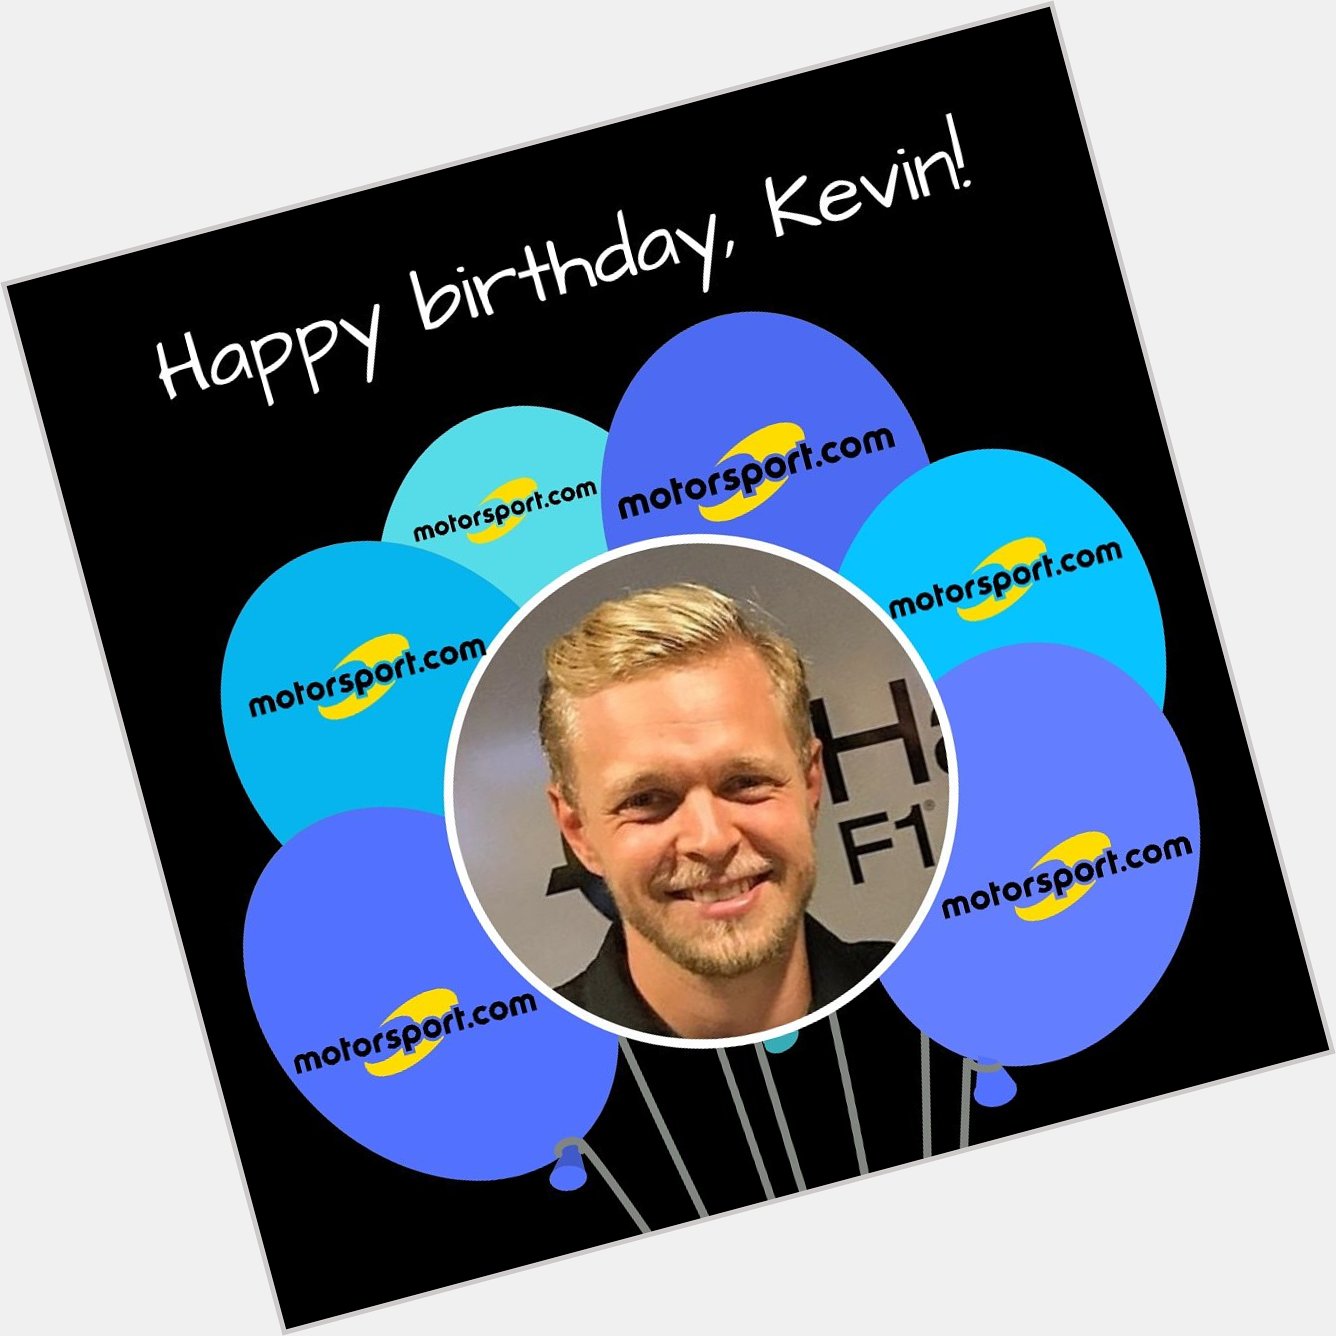 Bugün Haas pilotu  Kevin Magnussen\in do um günü! Happy birthday, Kevin! 